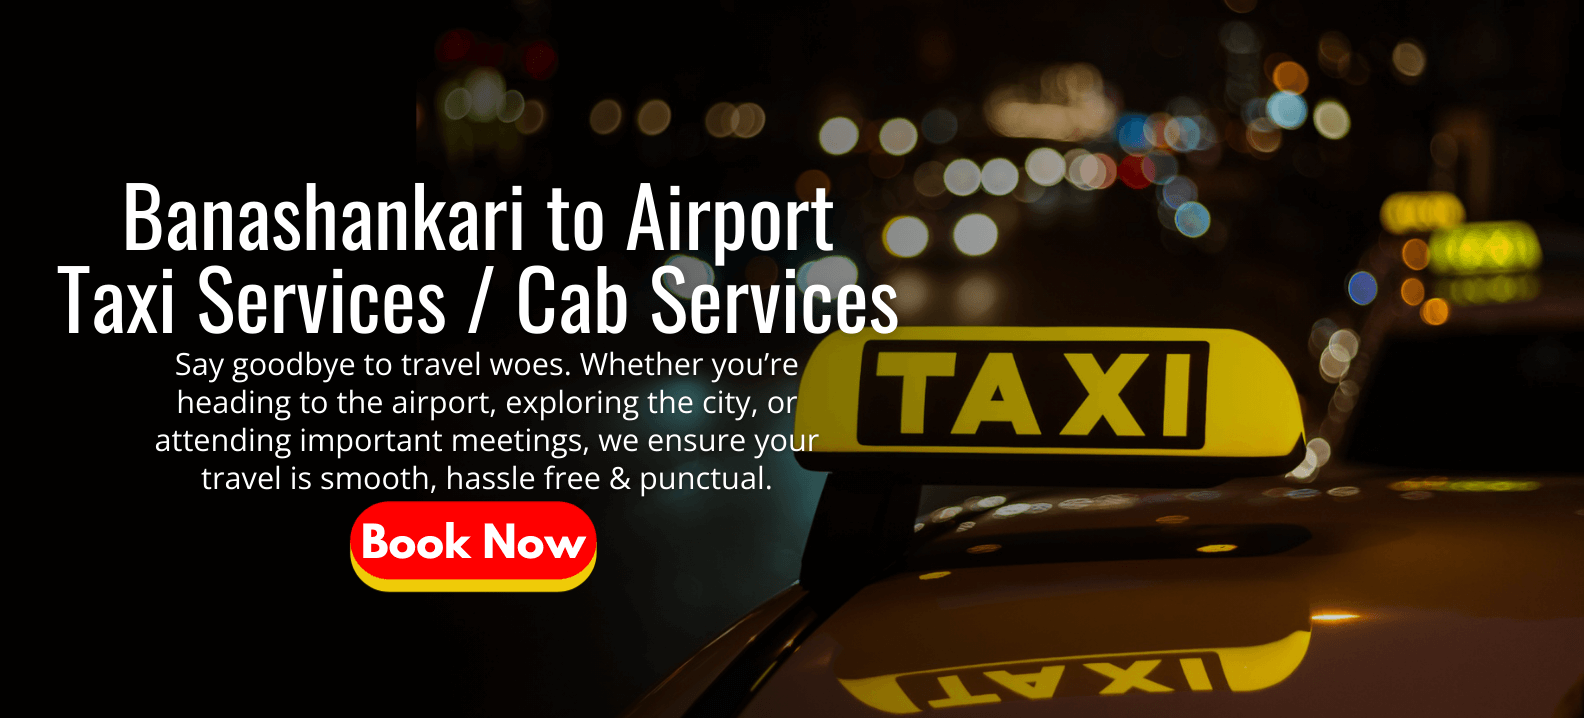 Banashankari to Airport Taxi Services _ Cab Services